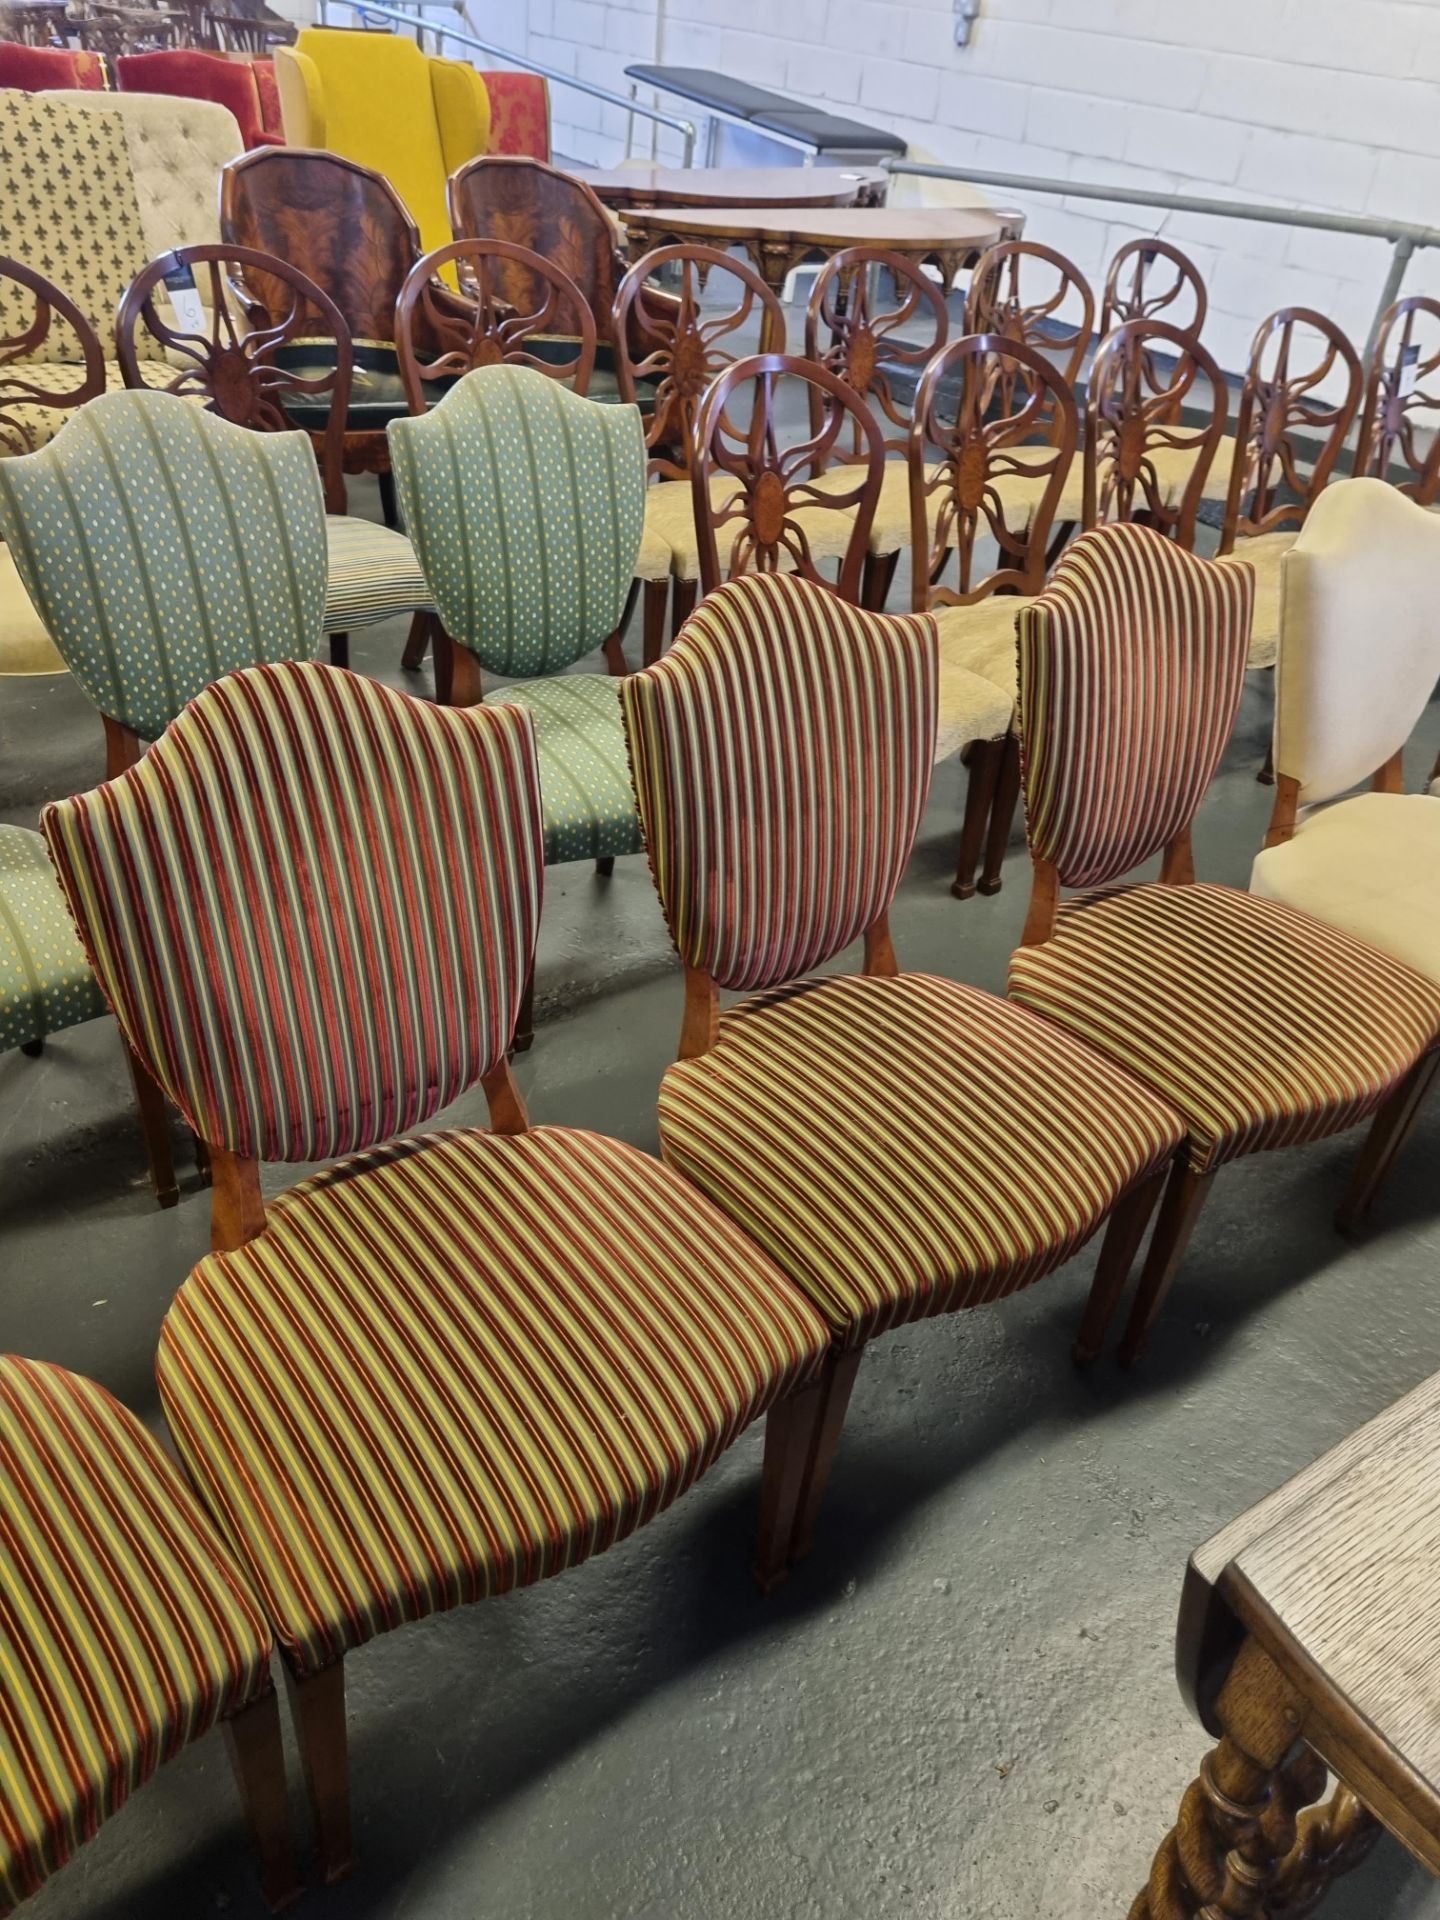 7 X Arthur Brett Upholstered Shield Back Chairs In Green/Red/Gold Stripe Bespoke Upholstery The - Image 4 of 5